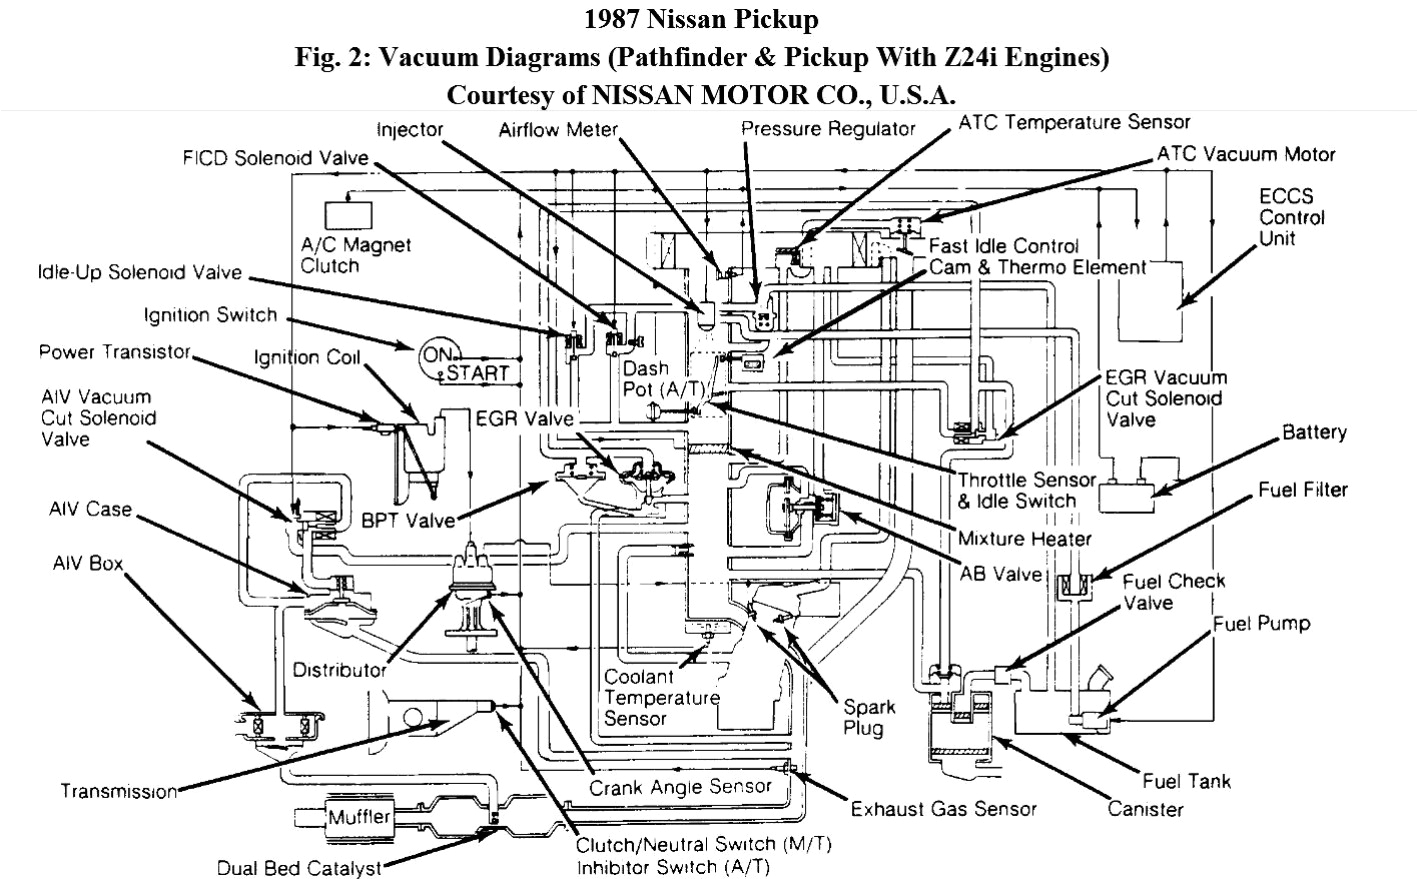 1987 nissan sentra vacuum diagram likewise 1985 nissan pickup vacuum diagram moreover 1996 nissan pickup vacuum diagram on nissan 4 0